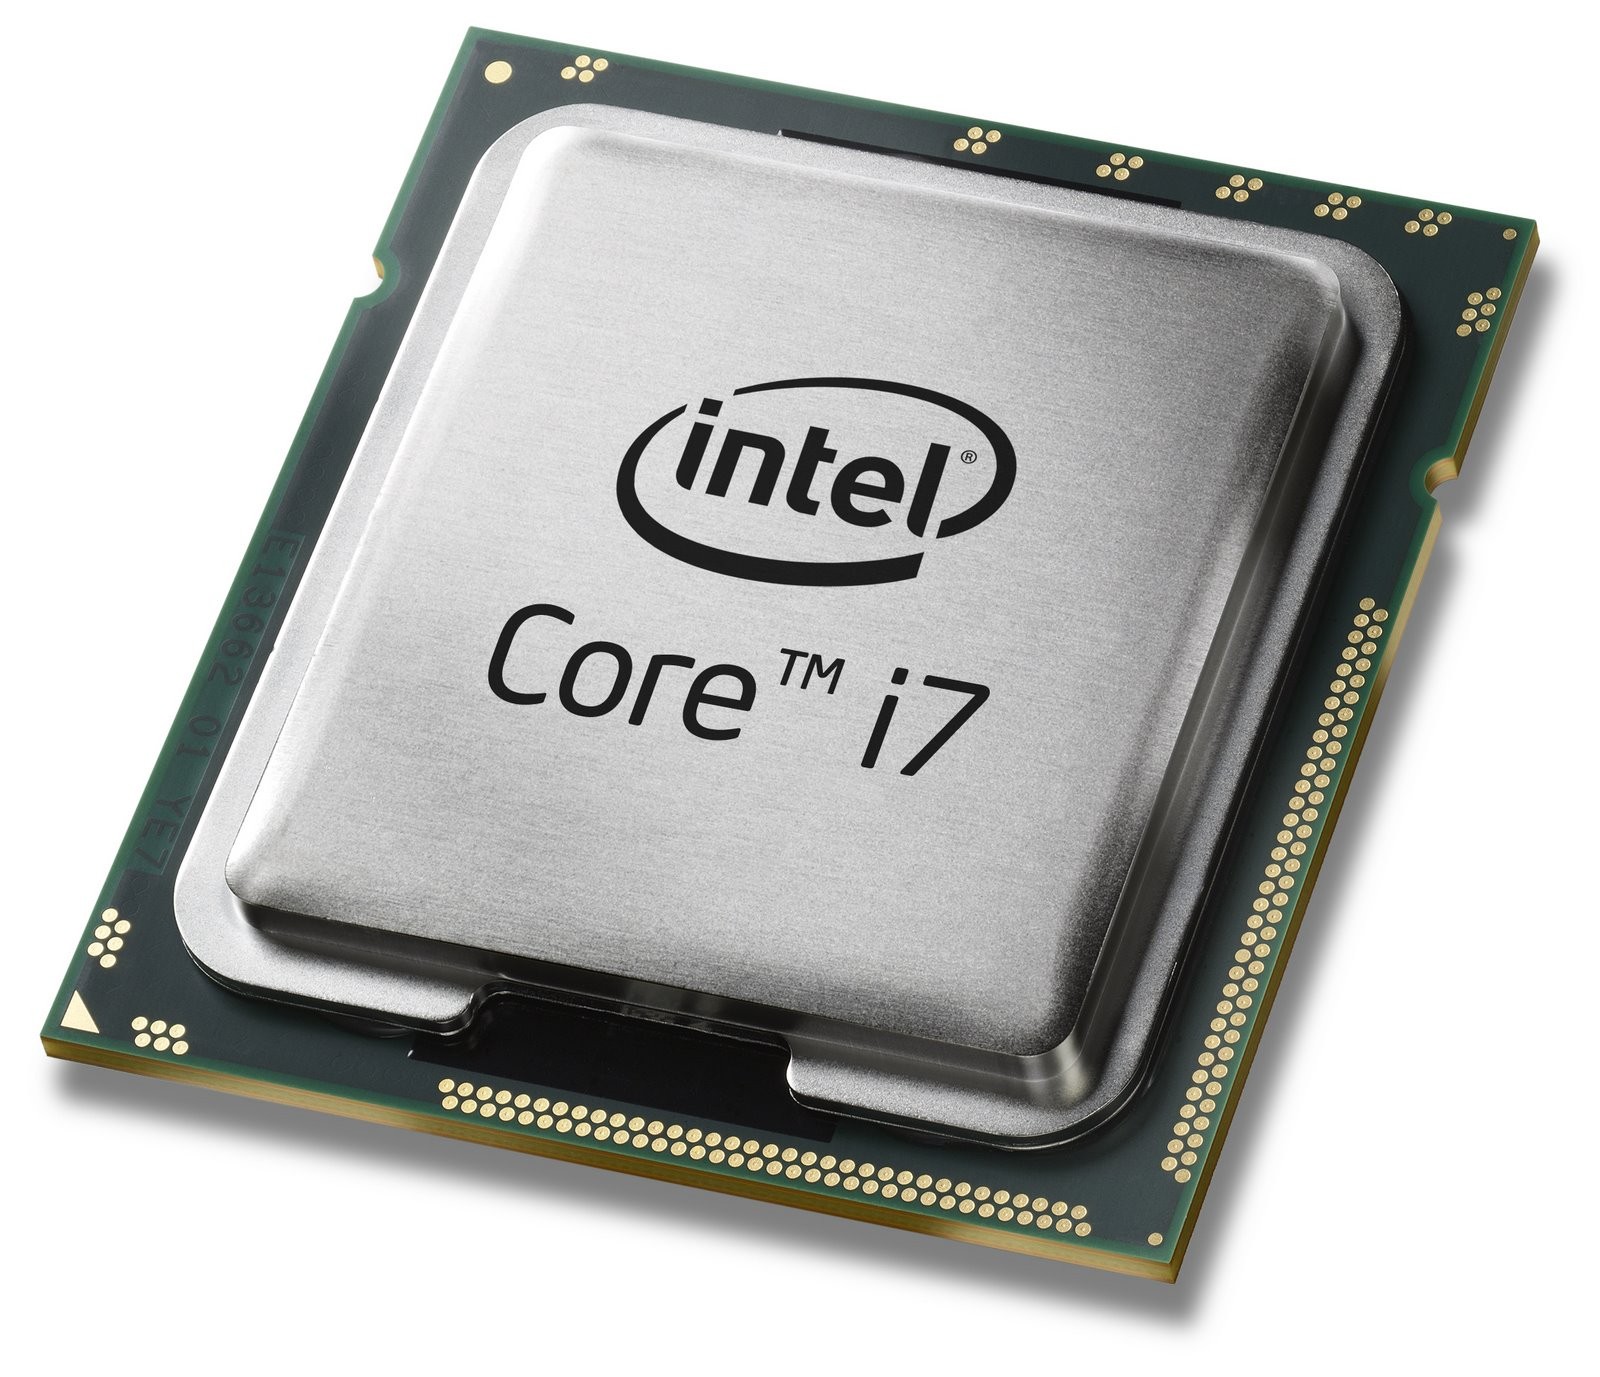 500030223-Intel Core i7-4770 SR149 3.4Ghz 8M LGA 1150 Processor-image